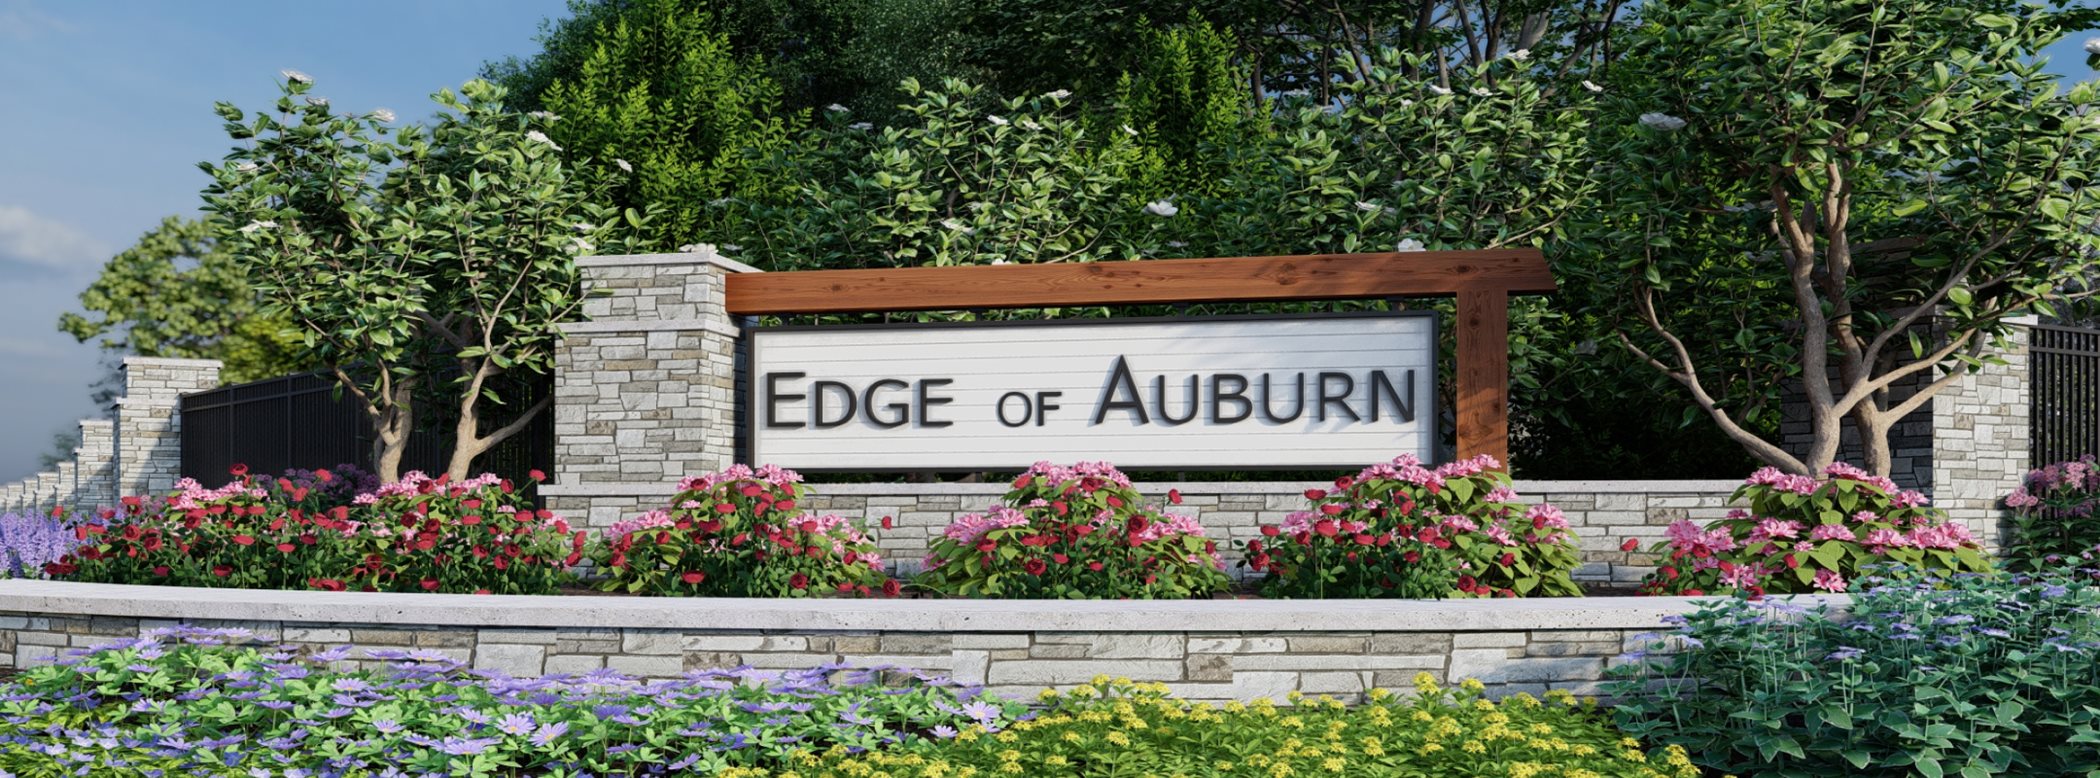 Edge of Auburn